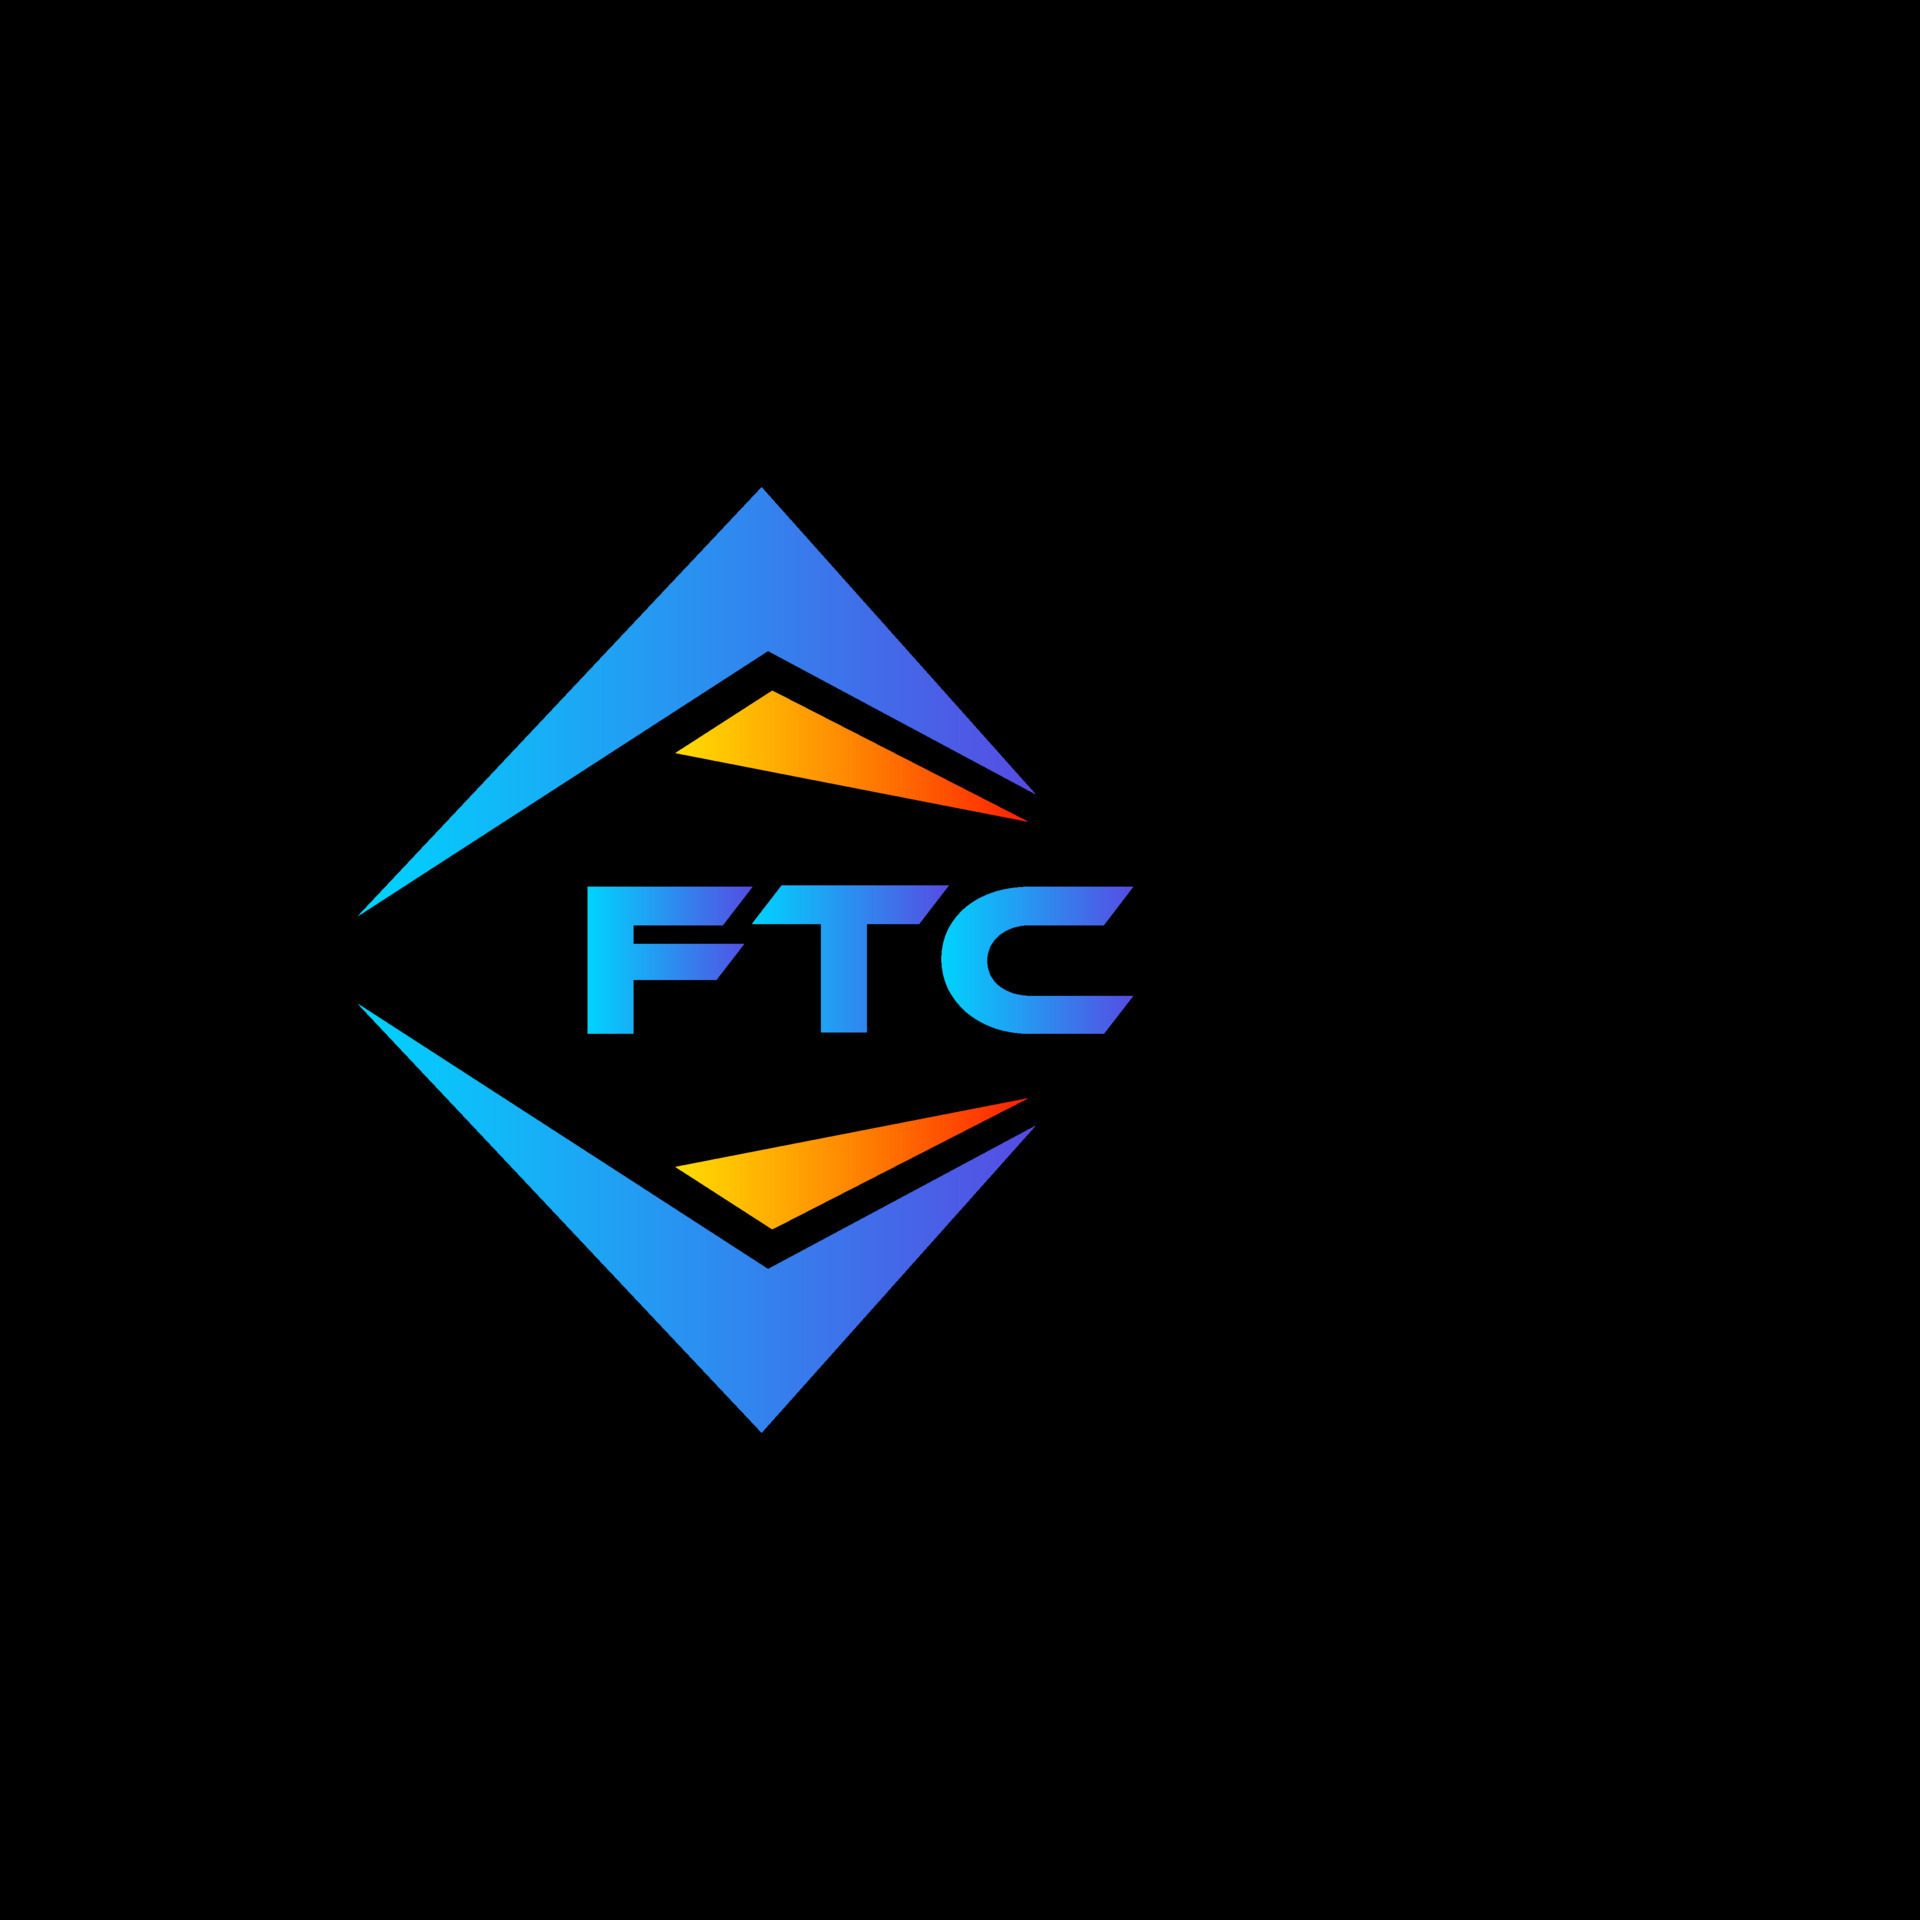 FTC – FTC SKATEBOARDING